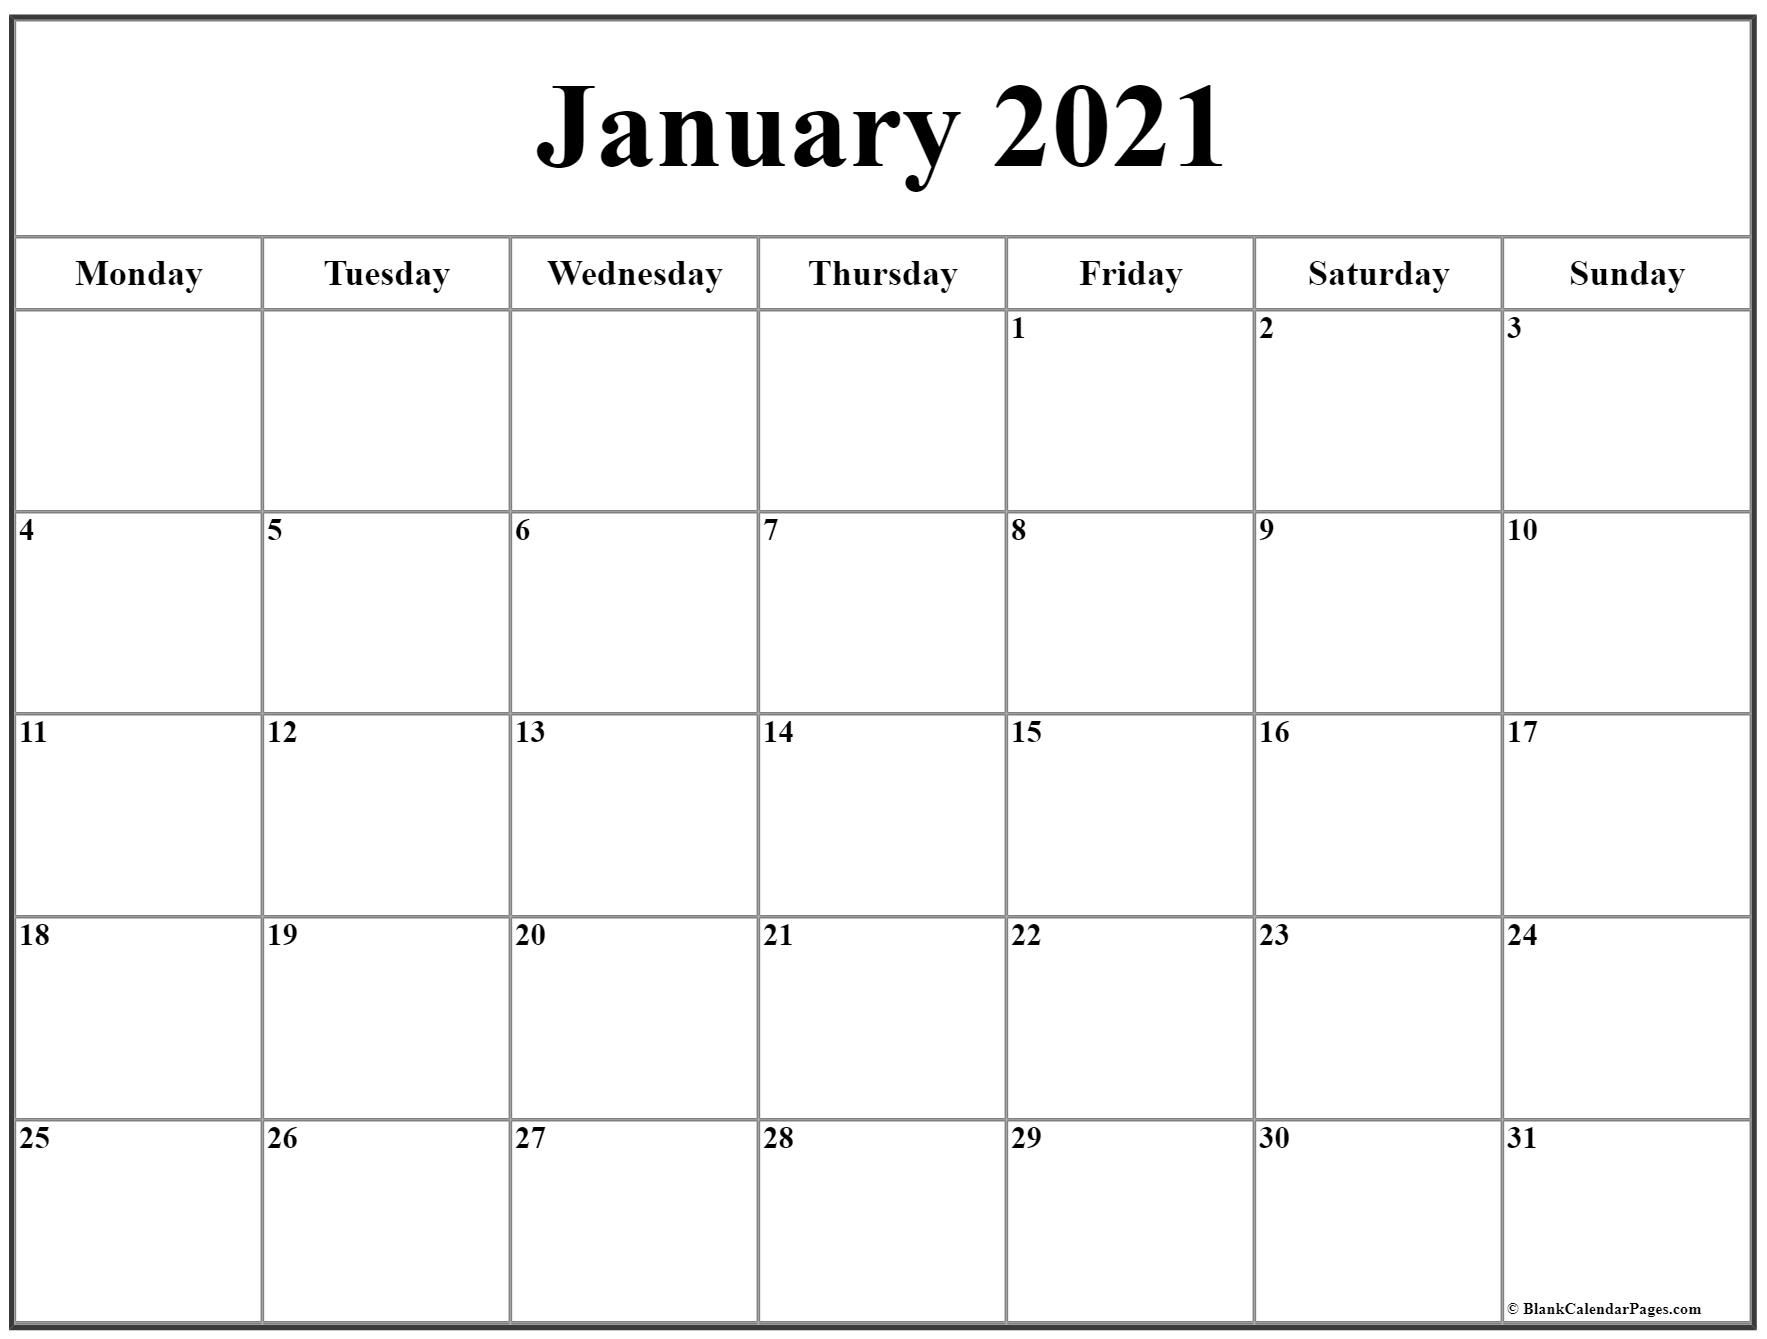 january 2021 monday calendar | monday to sunday